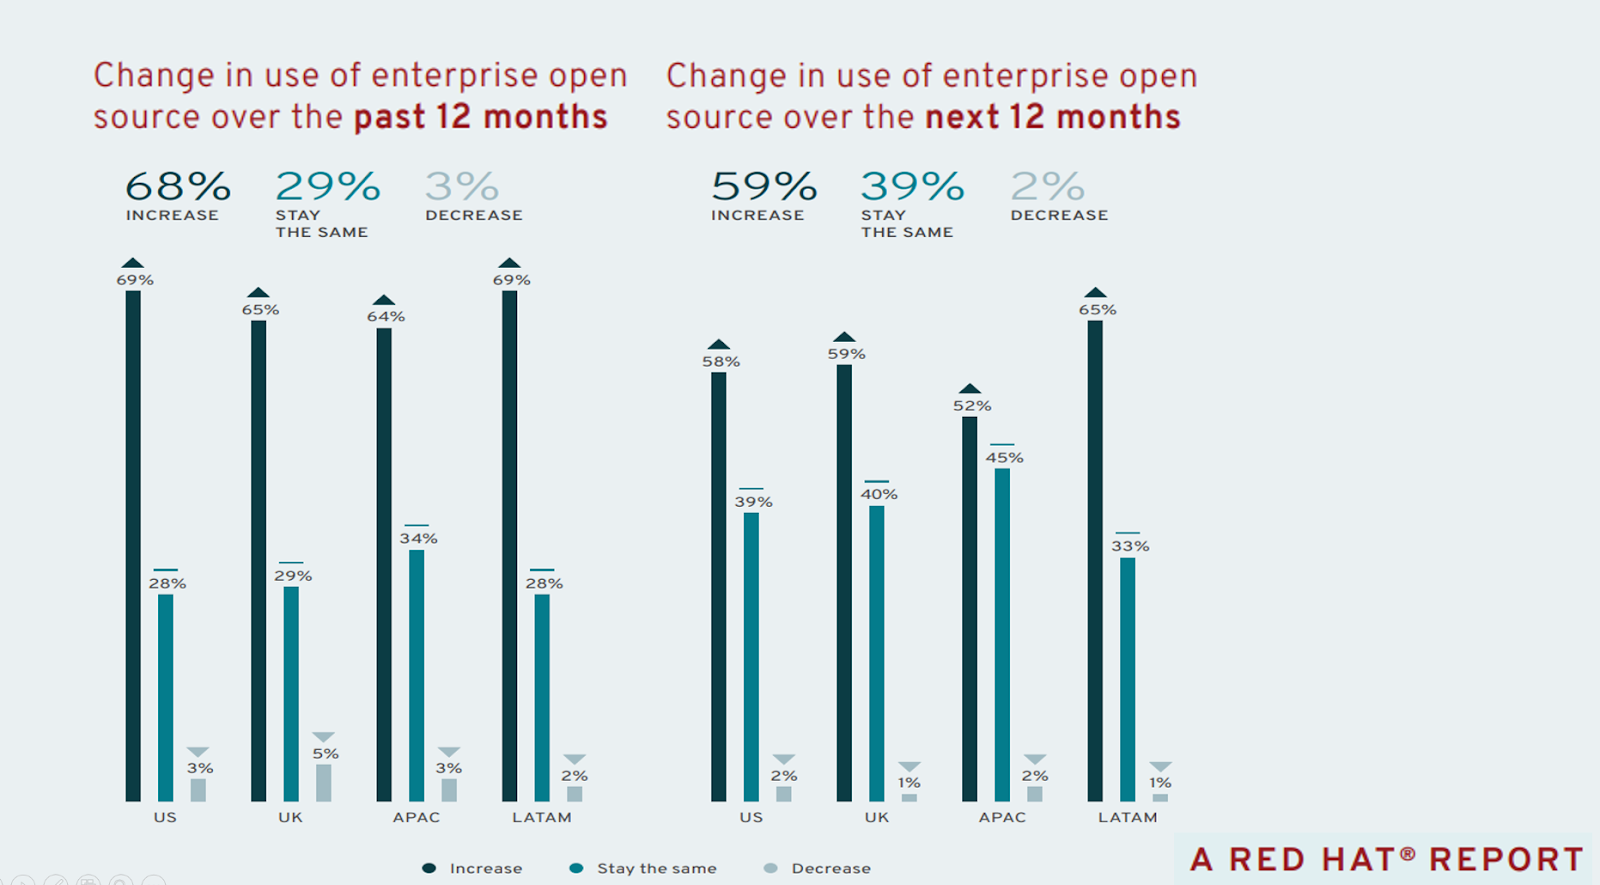 Change in use of enterprise open source